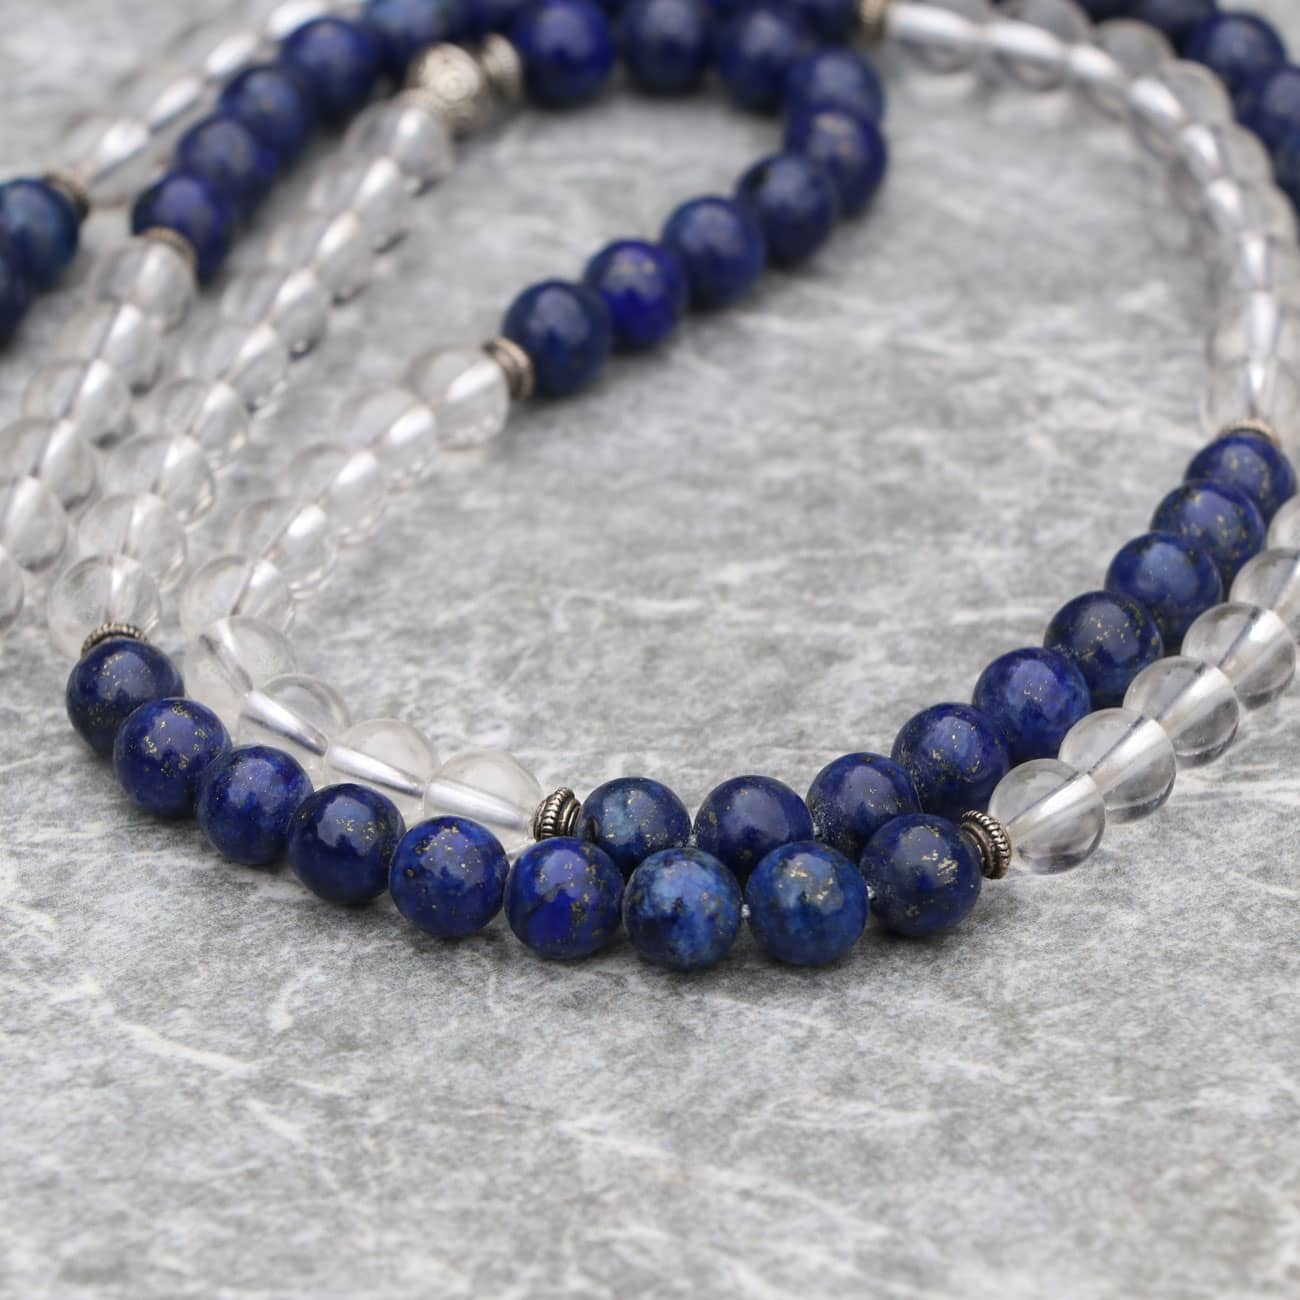 Buy the best Lapis Lazuli & Crystal Stone Japa Mala